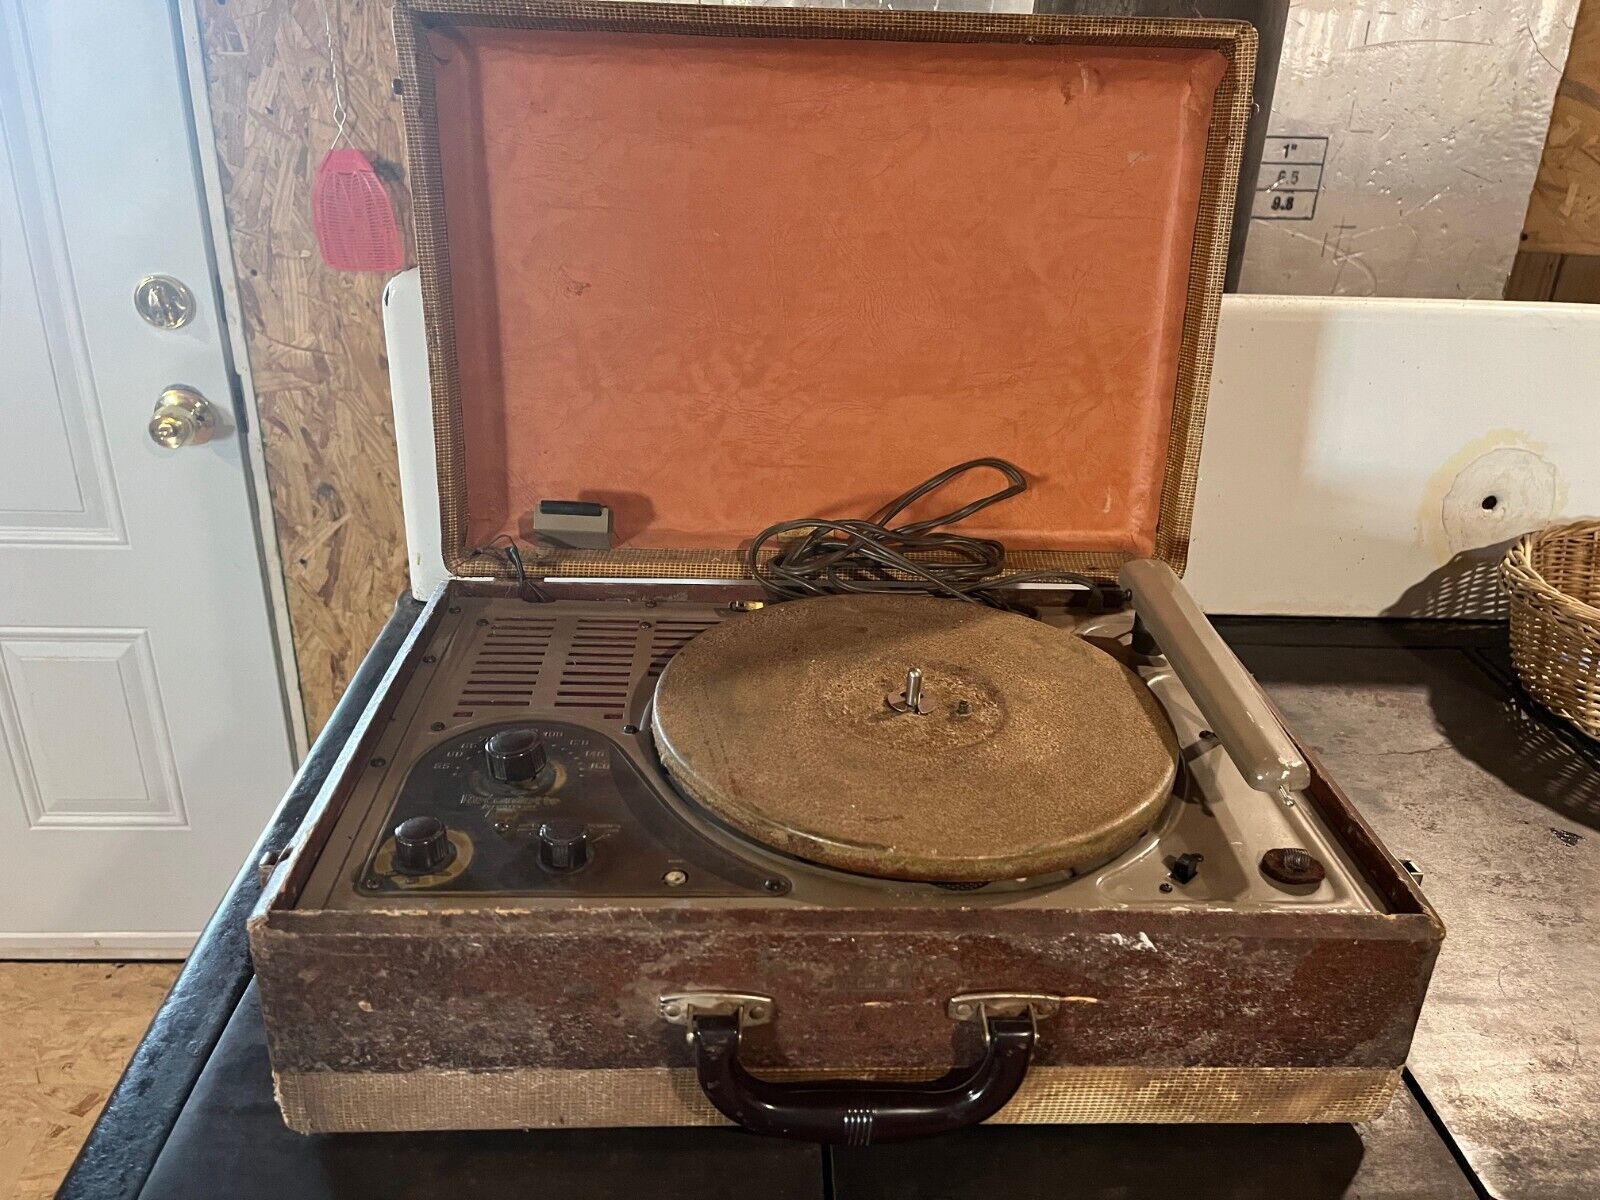 Wilcox-Gay Portable Radio Recordette Turntable - Vintage - Rare Find